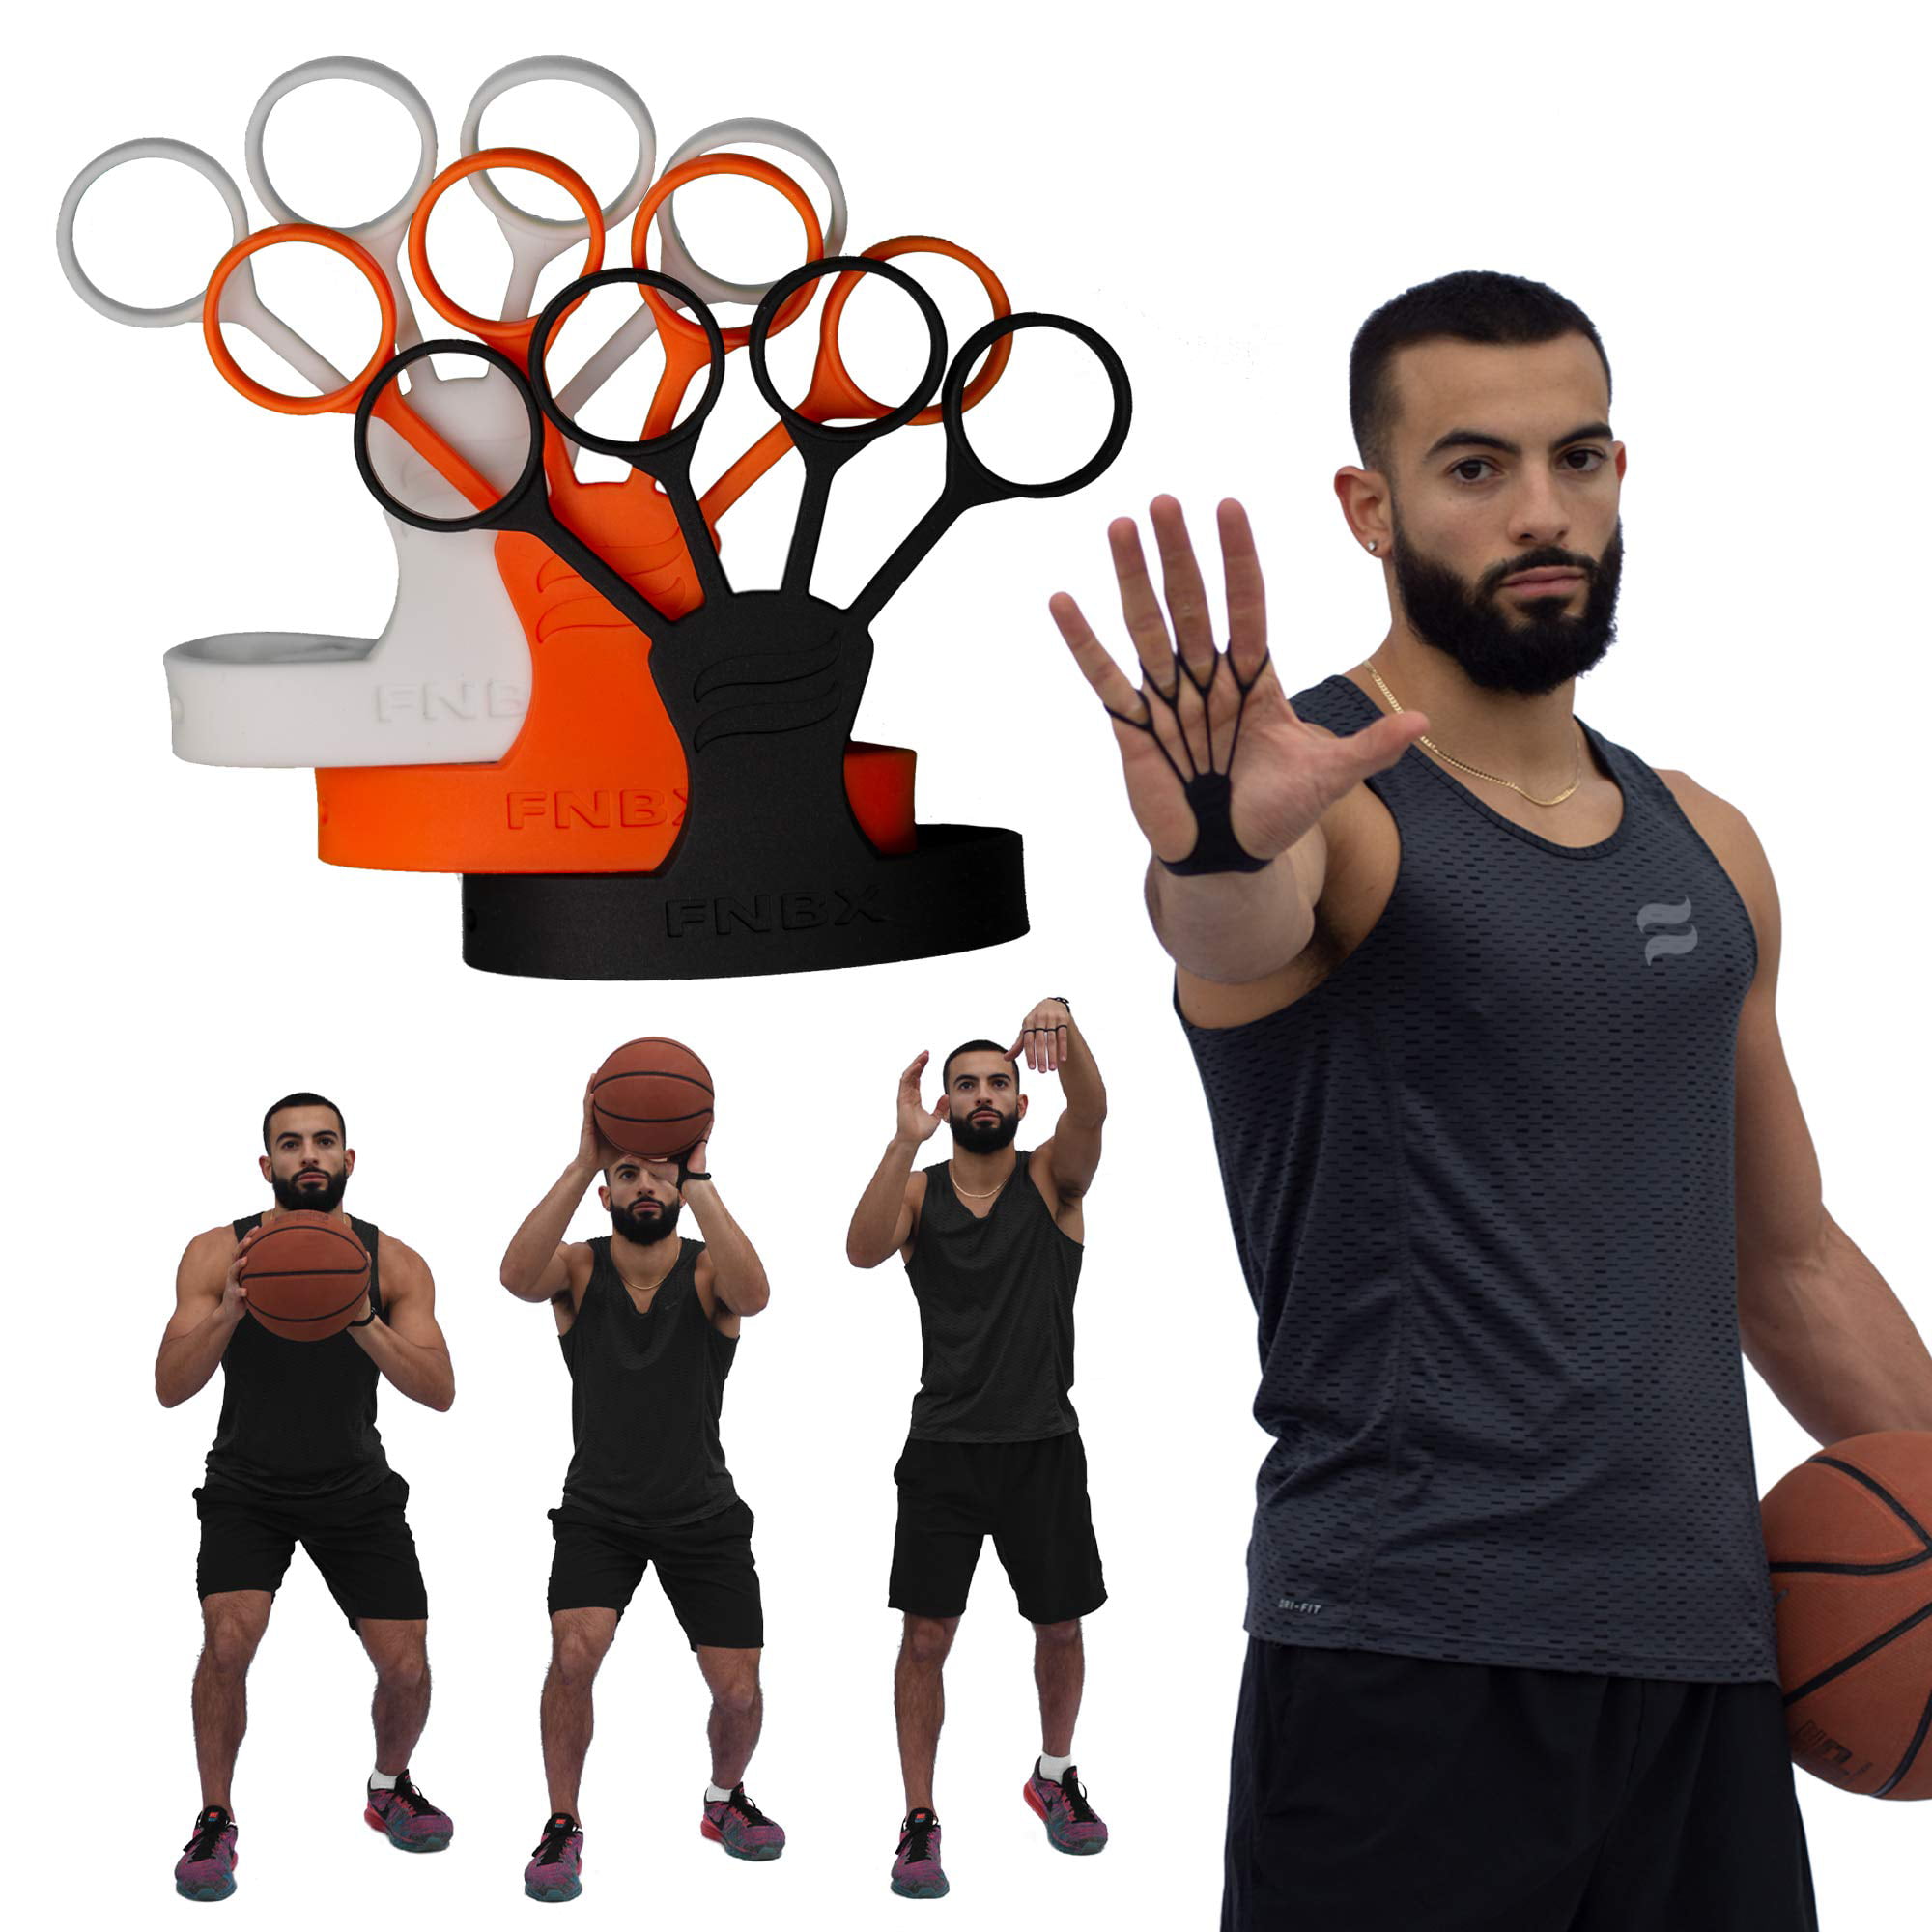 FNBX Flick Glove Follow Through/Shooting Aid Basketball Shooting Accessories 